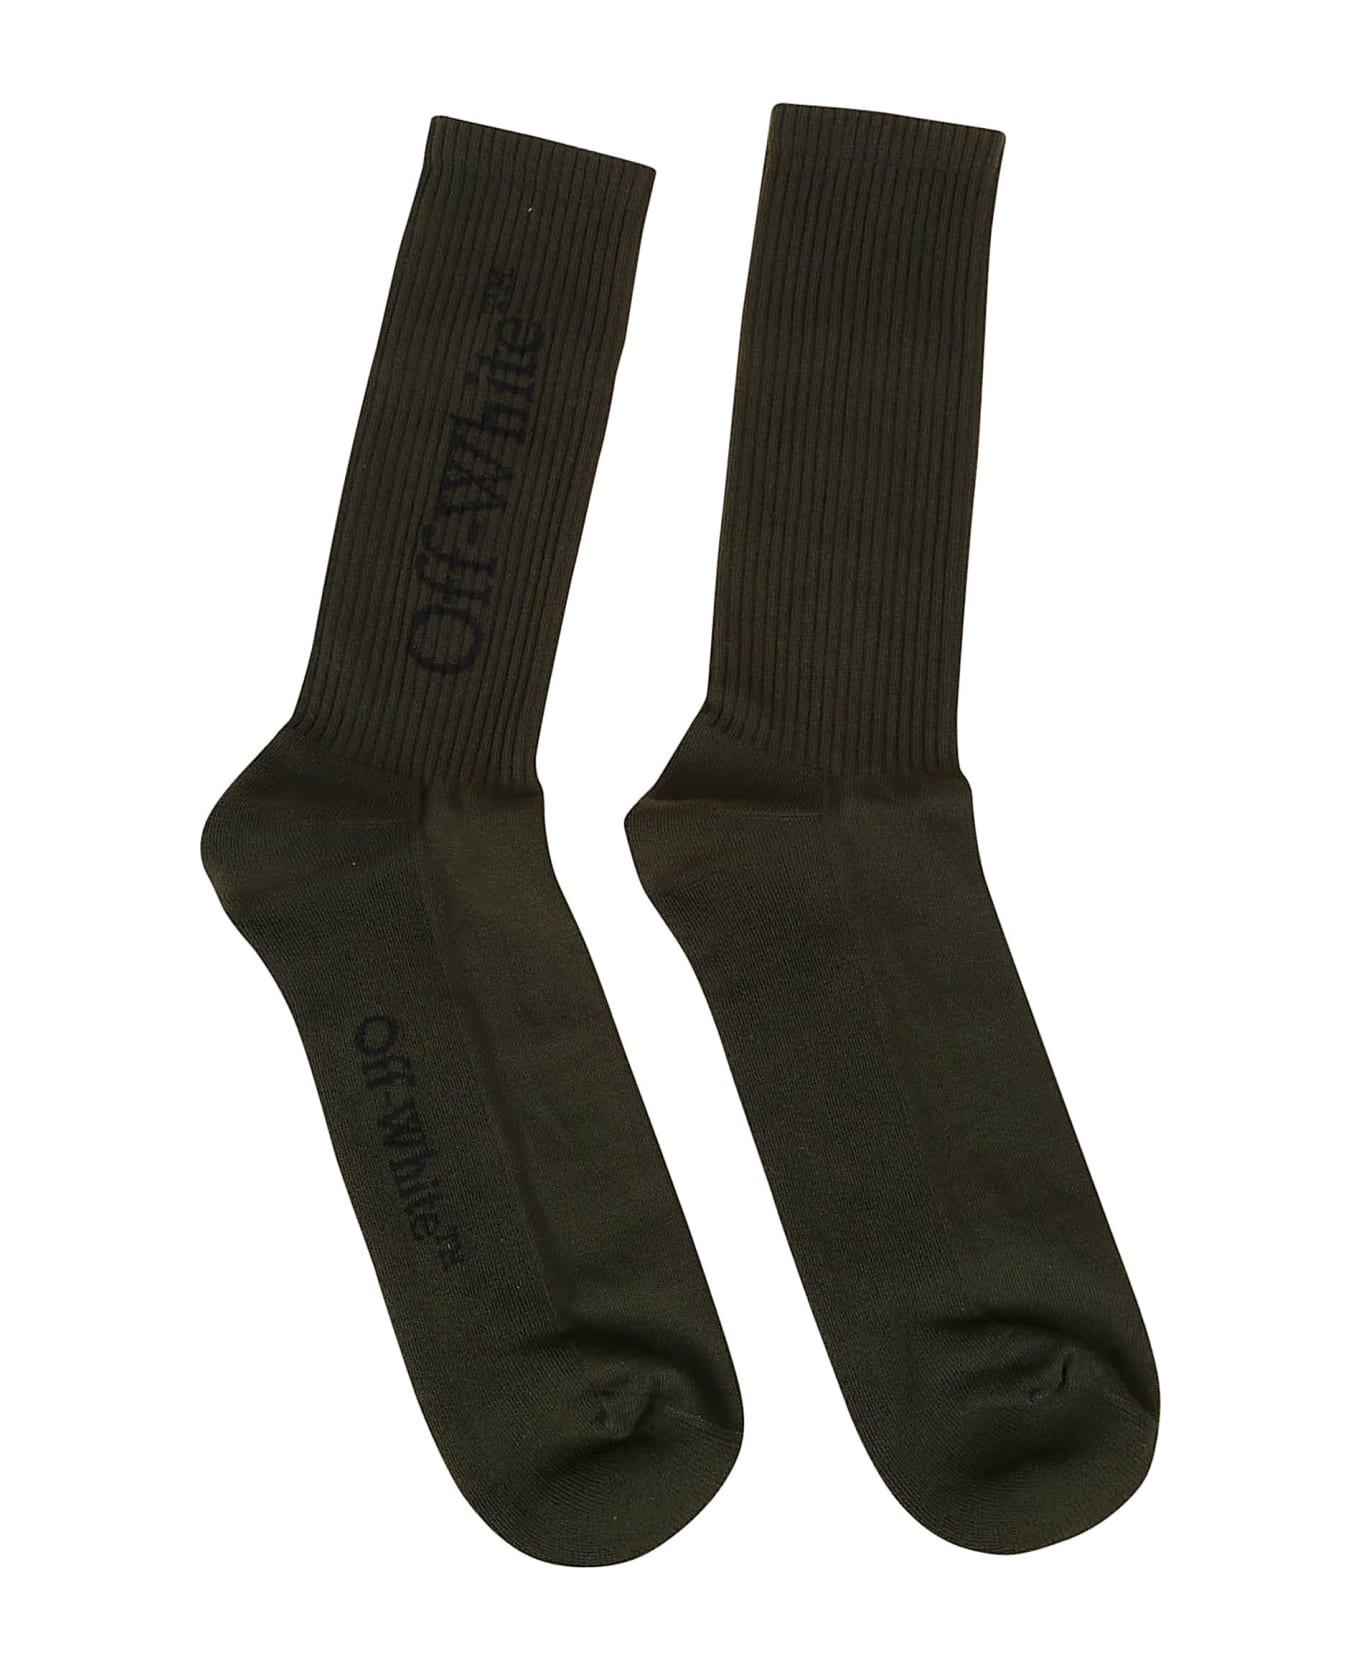 Off-White Big Logo Bksh Mid Calf Socks - Grey Black 靴下